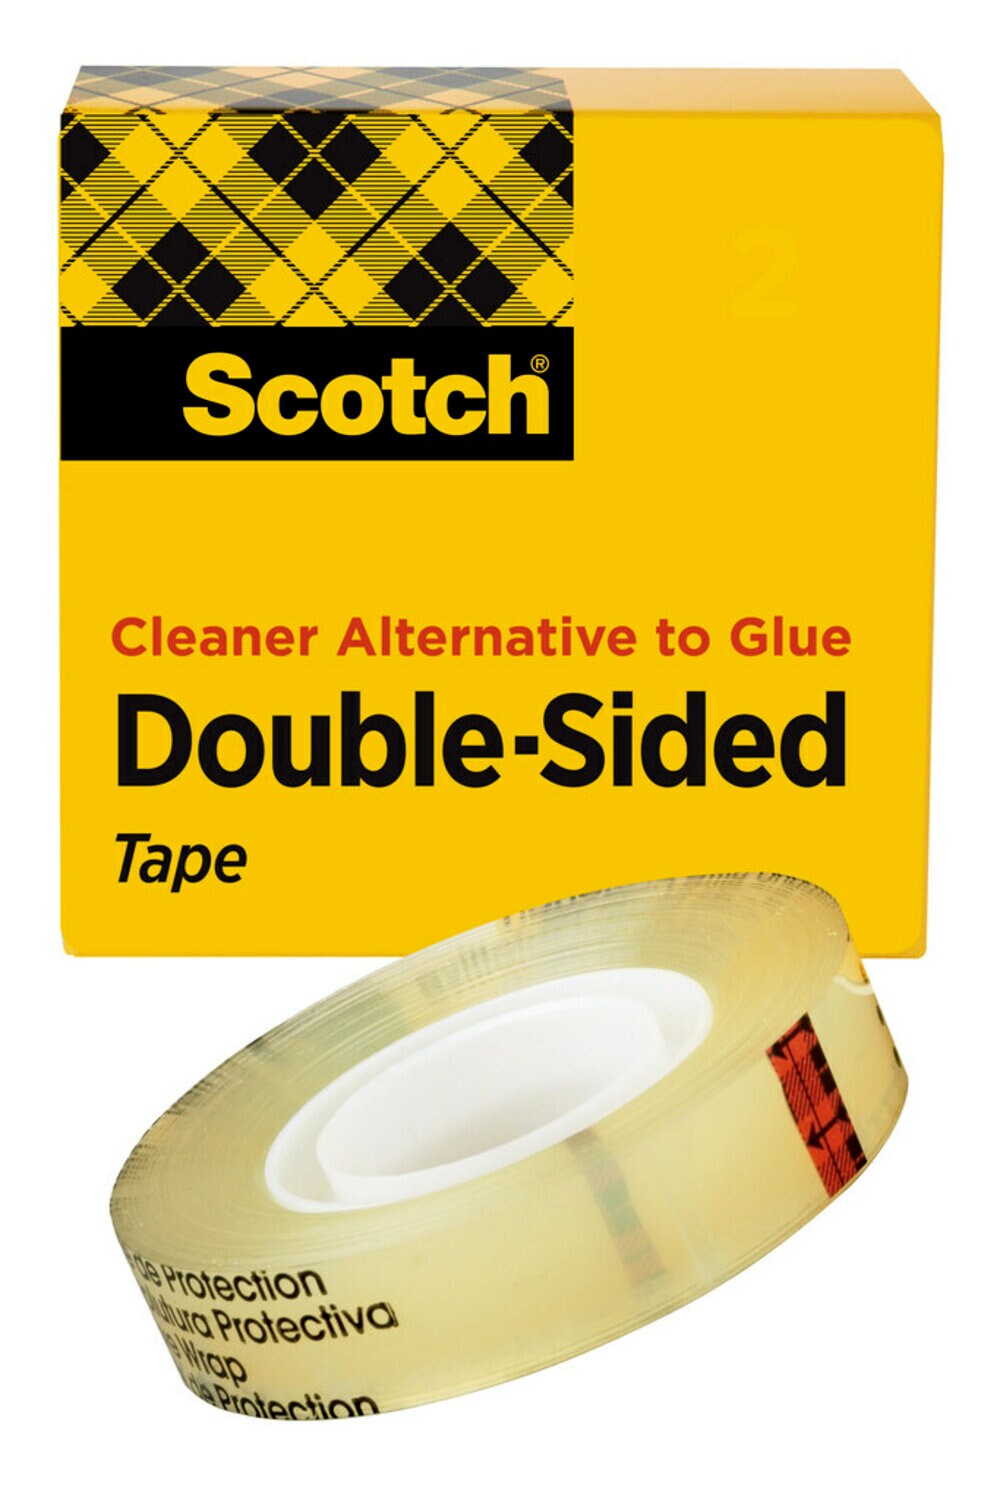 Scotch Cabinet Pack Magic Tape - 24 per pack - LD Products